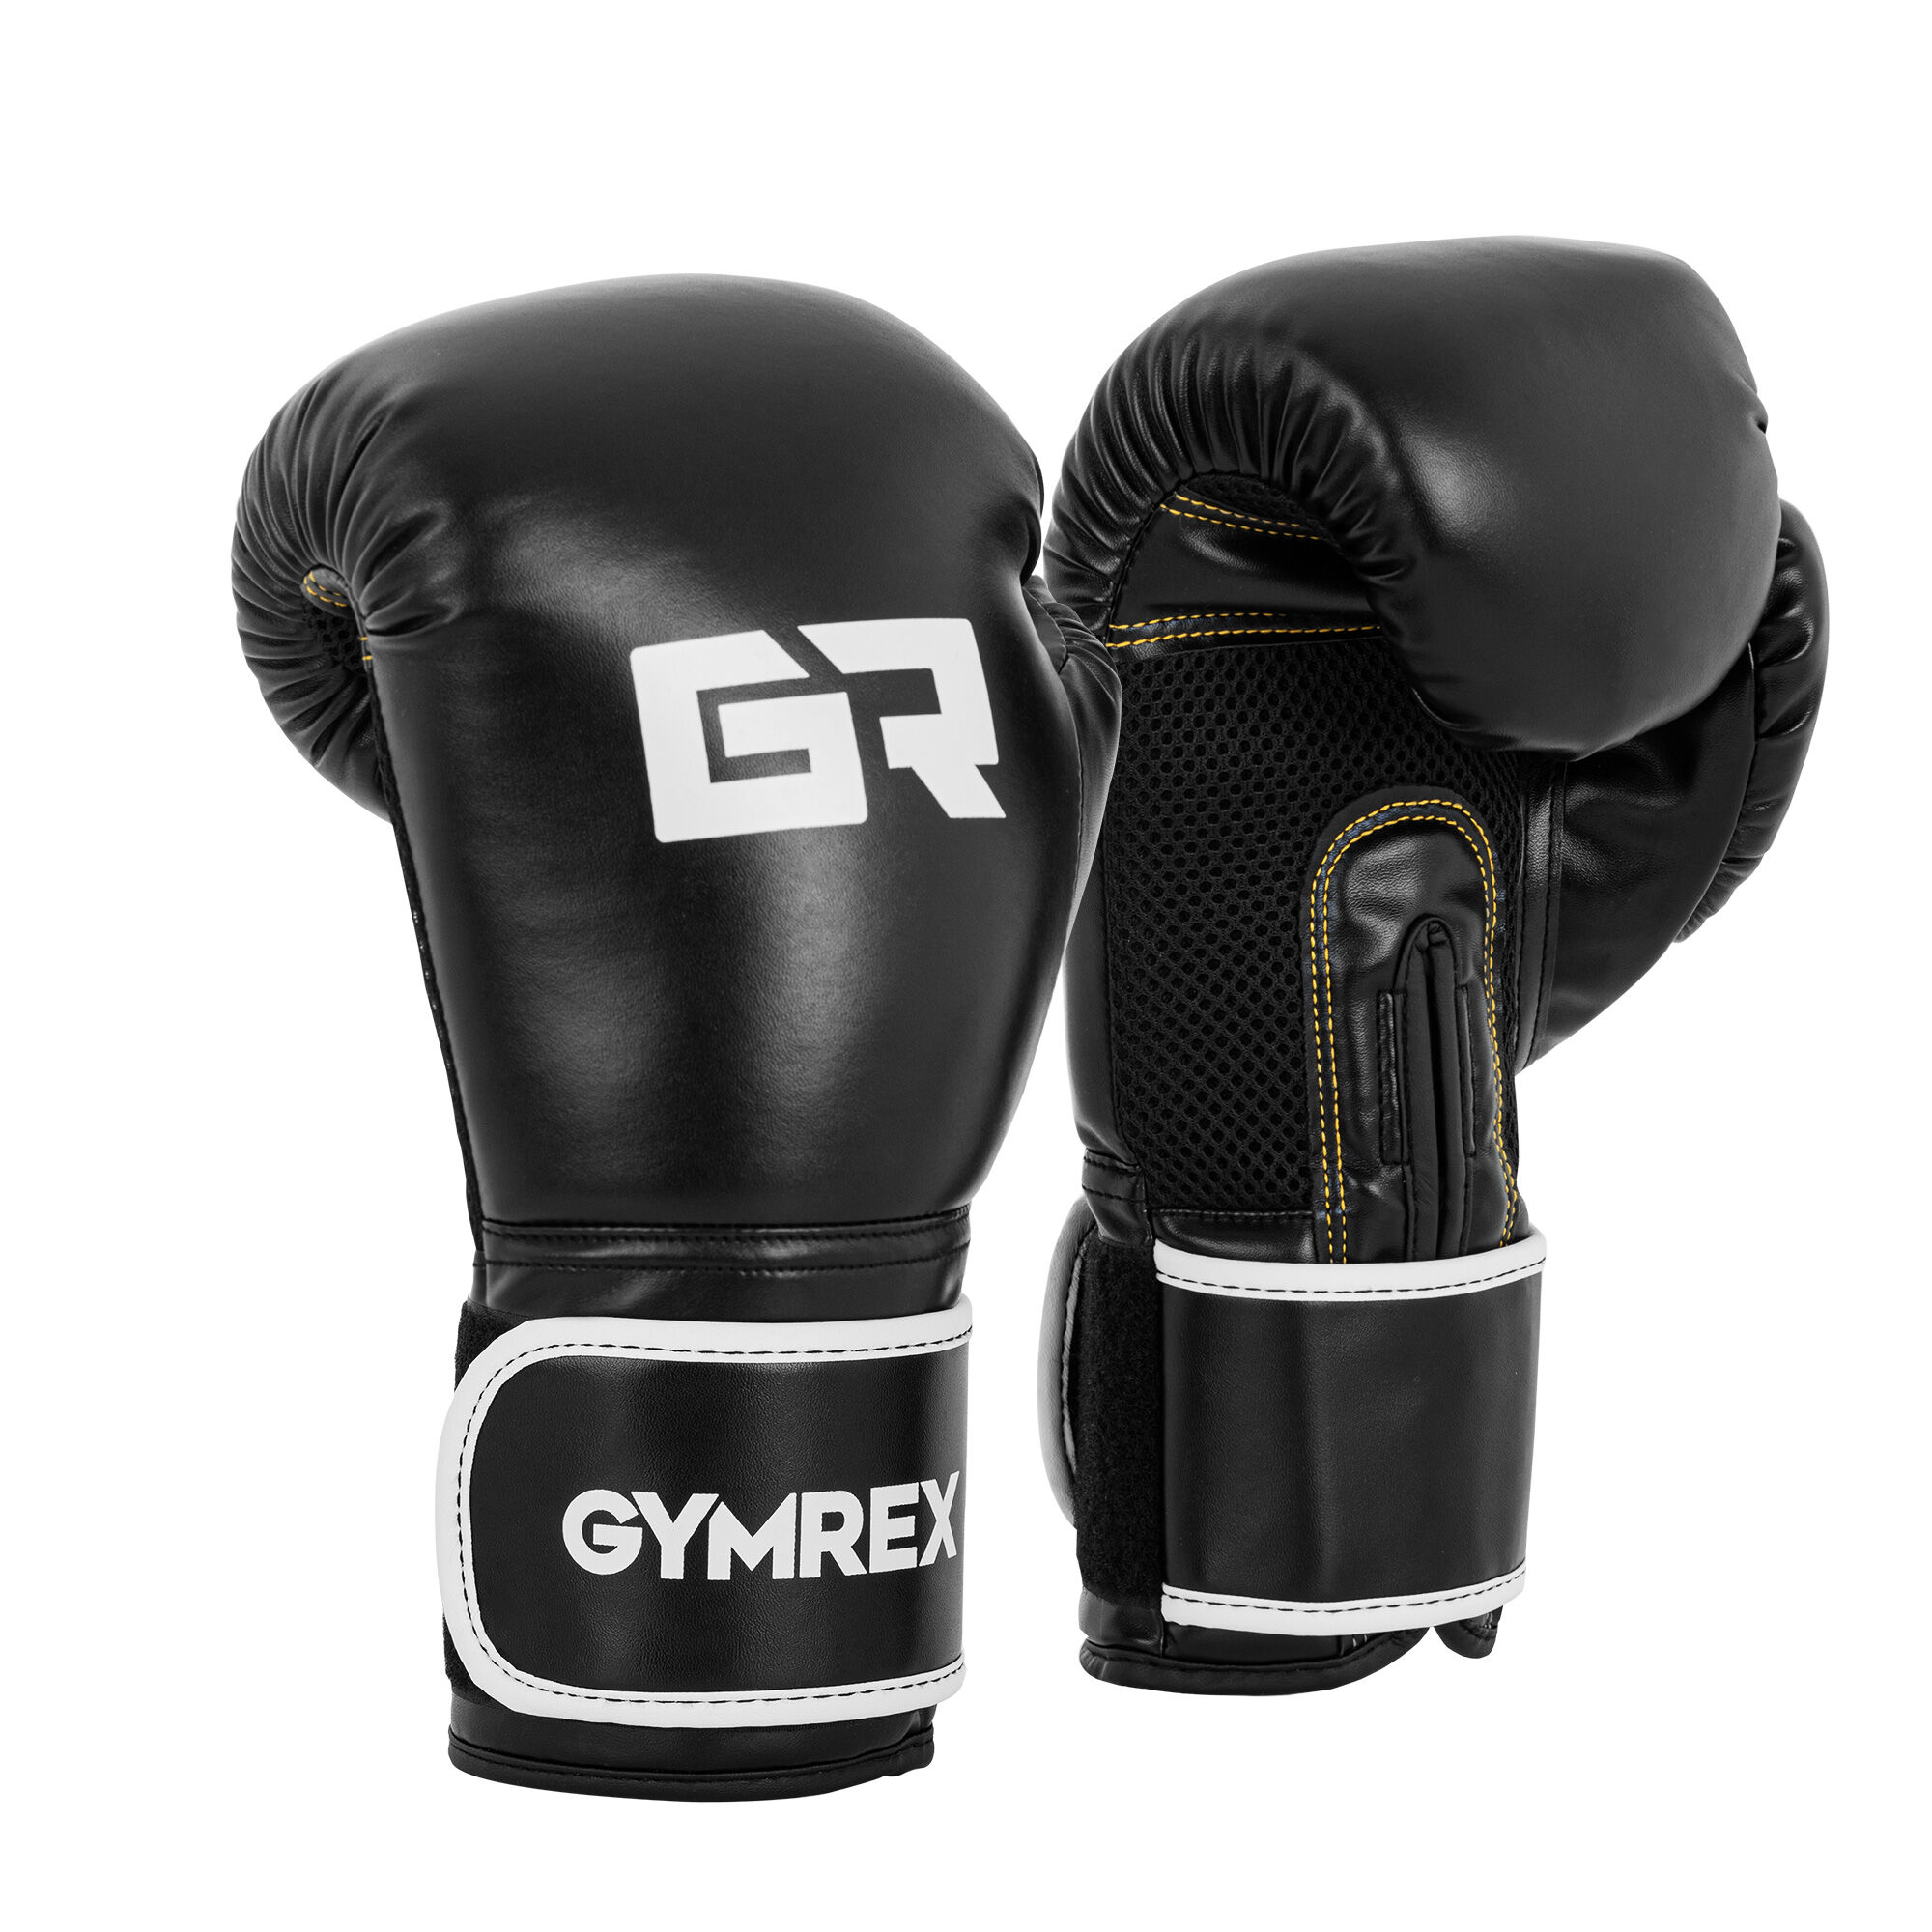 Gymrex Gants de boxe - 14 oz - Paume Mesh - Noirs GR-BG 14B